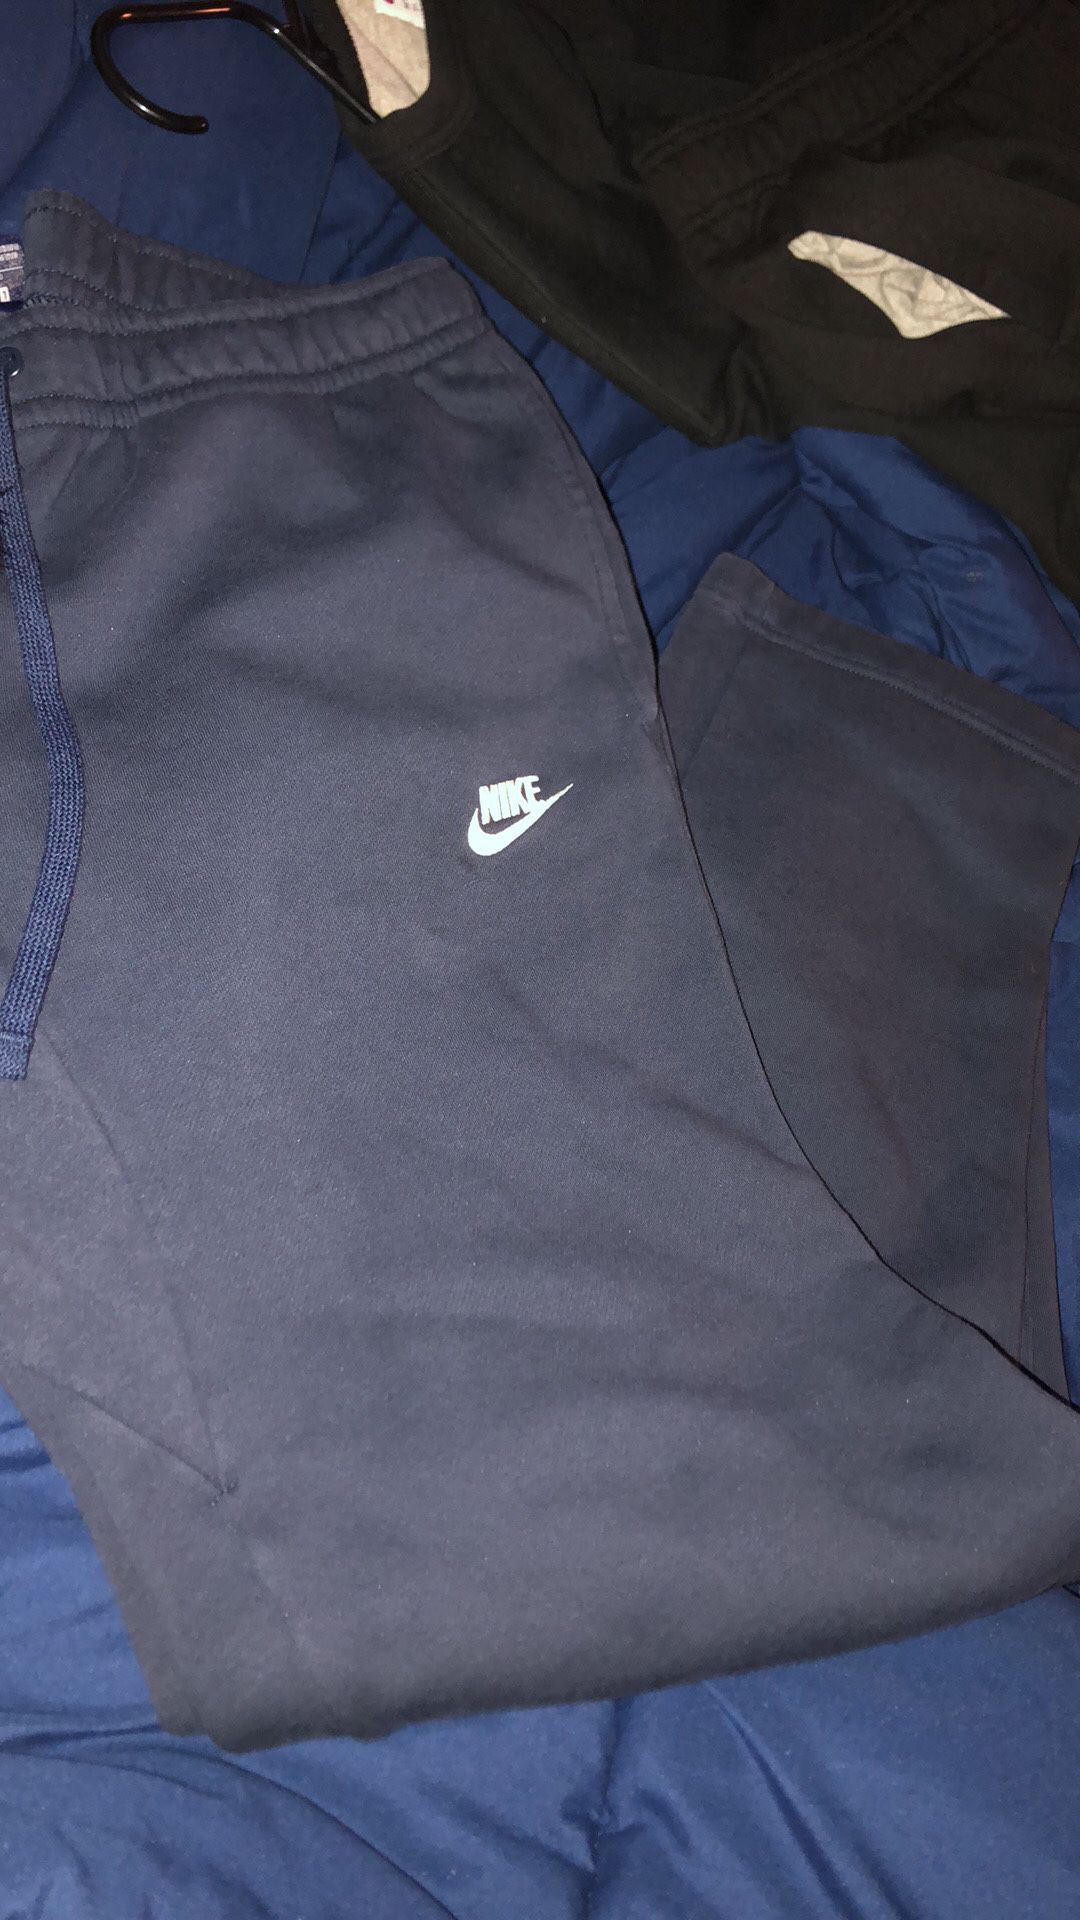 Men’s Nike sweat pants